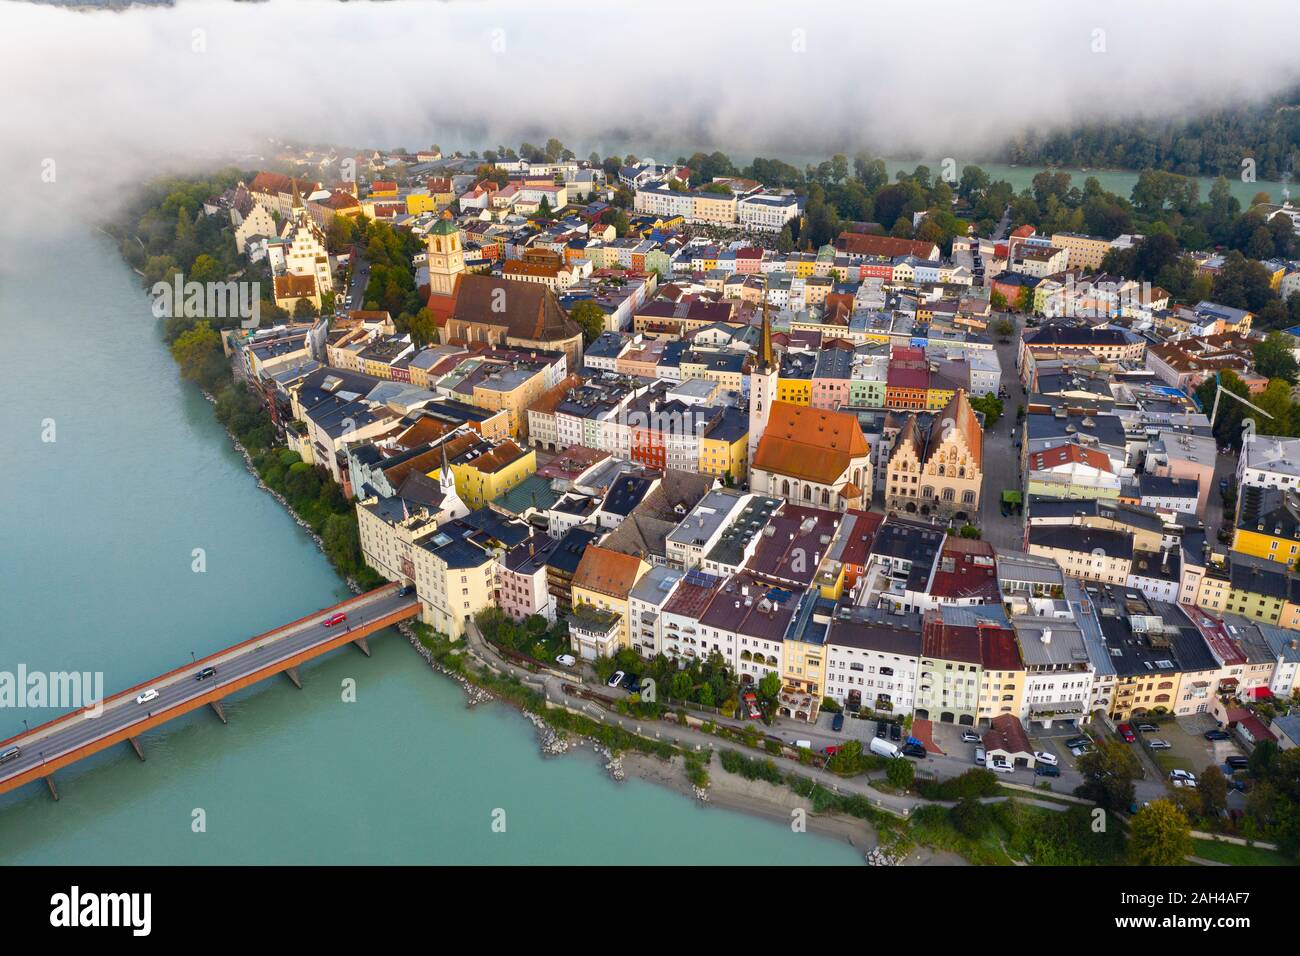 In Germania, in Baviera, Wasserburg am Inn, vista aerea di uno spessore di nebbia mattutina avvolgenti vecchia città sul fiume Foto Stock